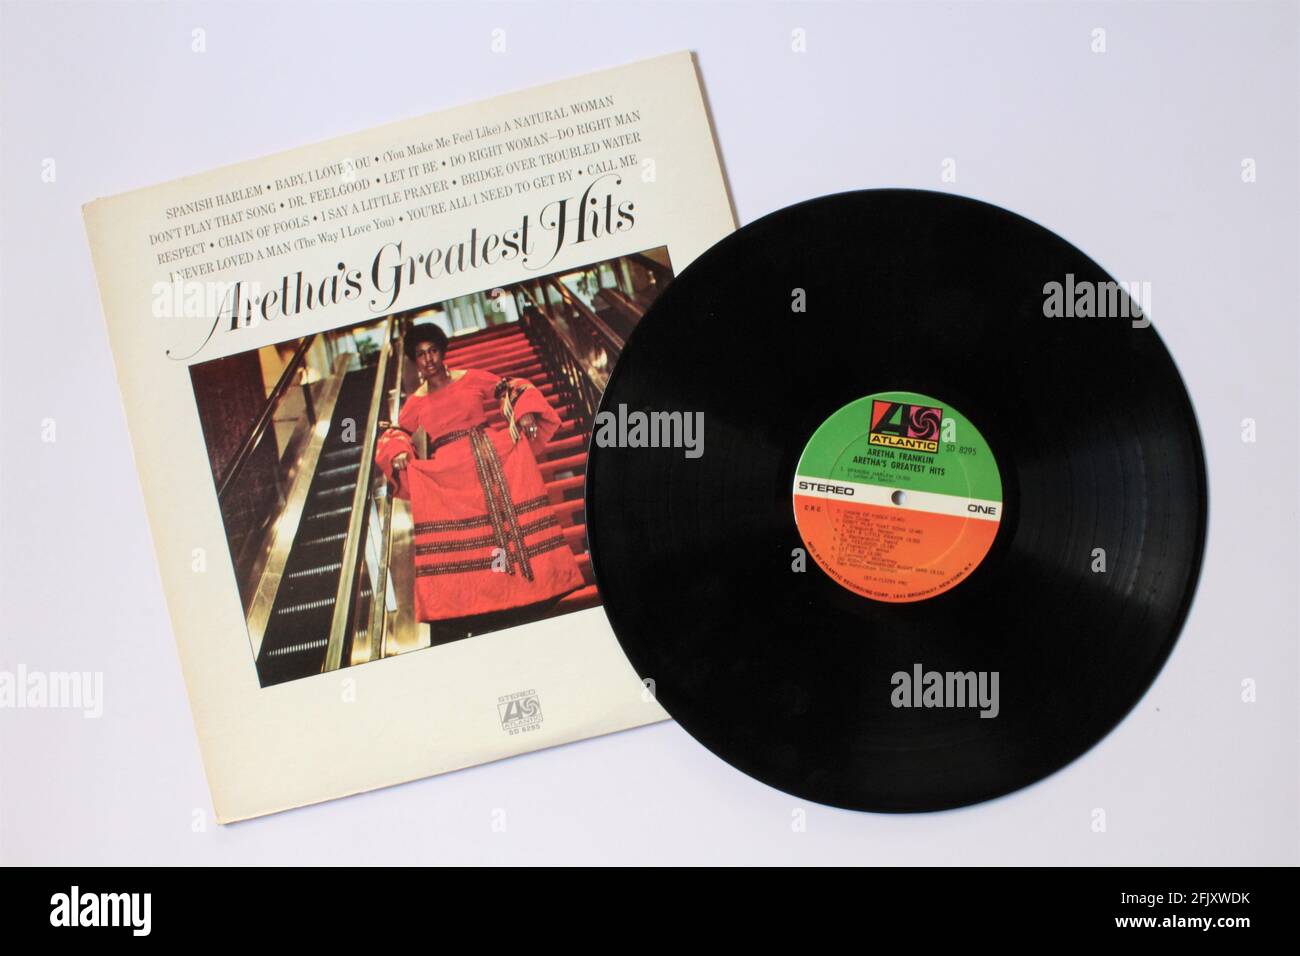 Queen of Soul, Aretha Franklin, álbum de música en disco LP de vinilo. El disco se titula Aretha's Greatest Hits Foto de stock